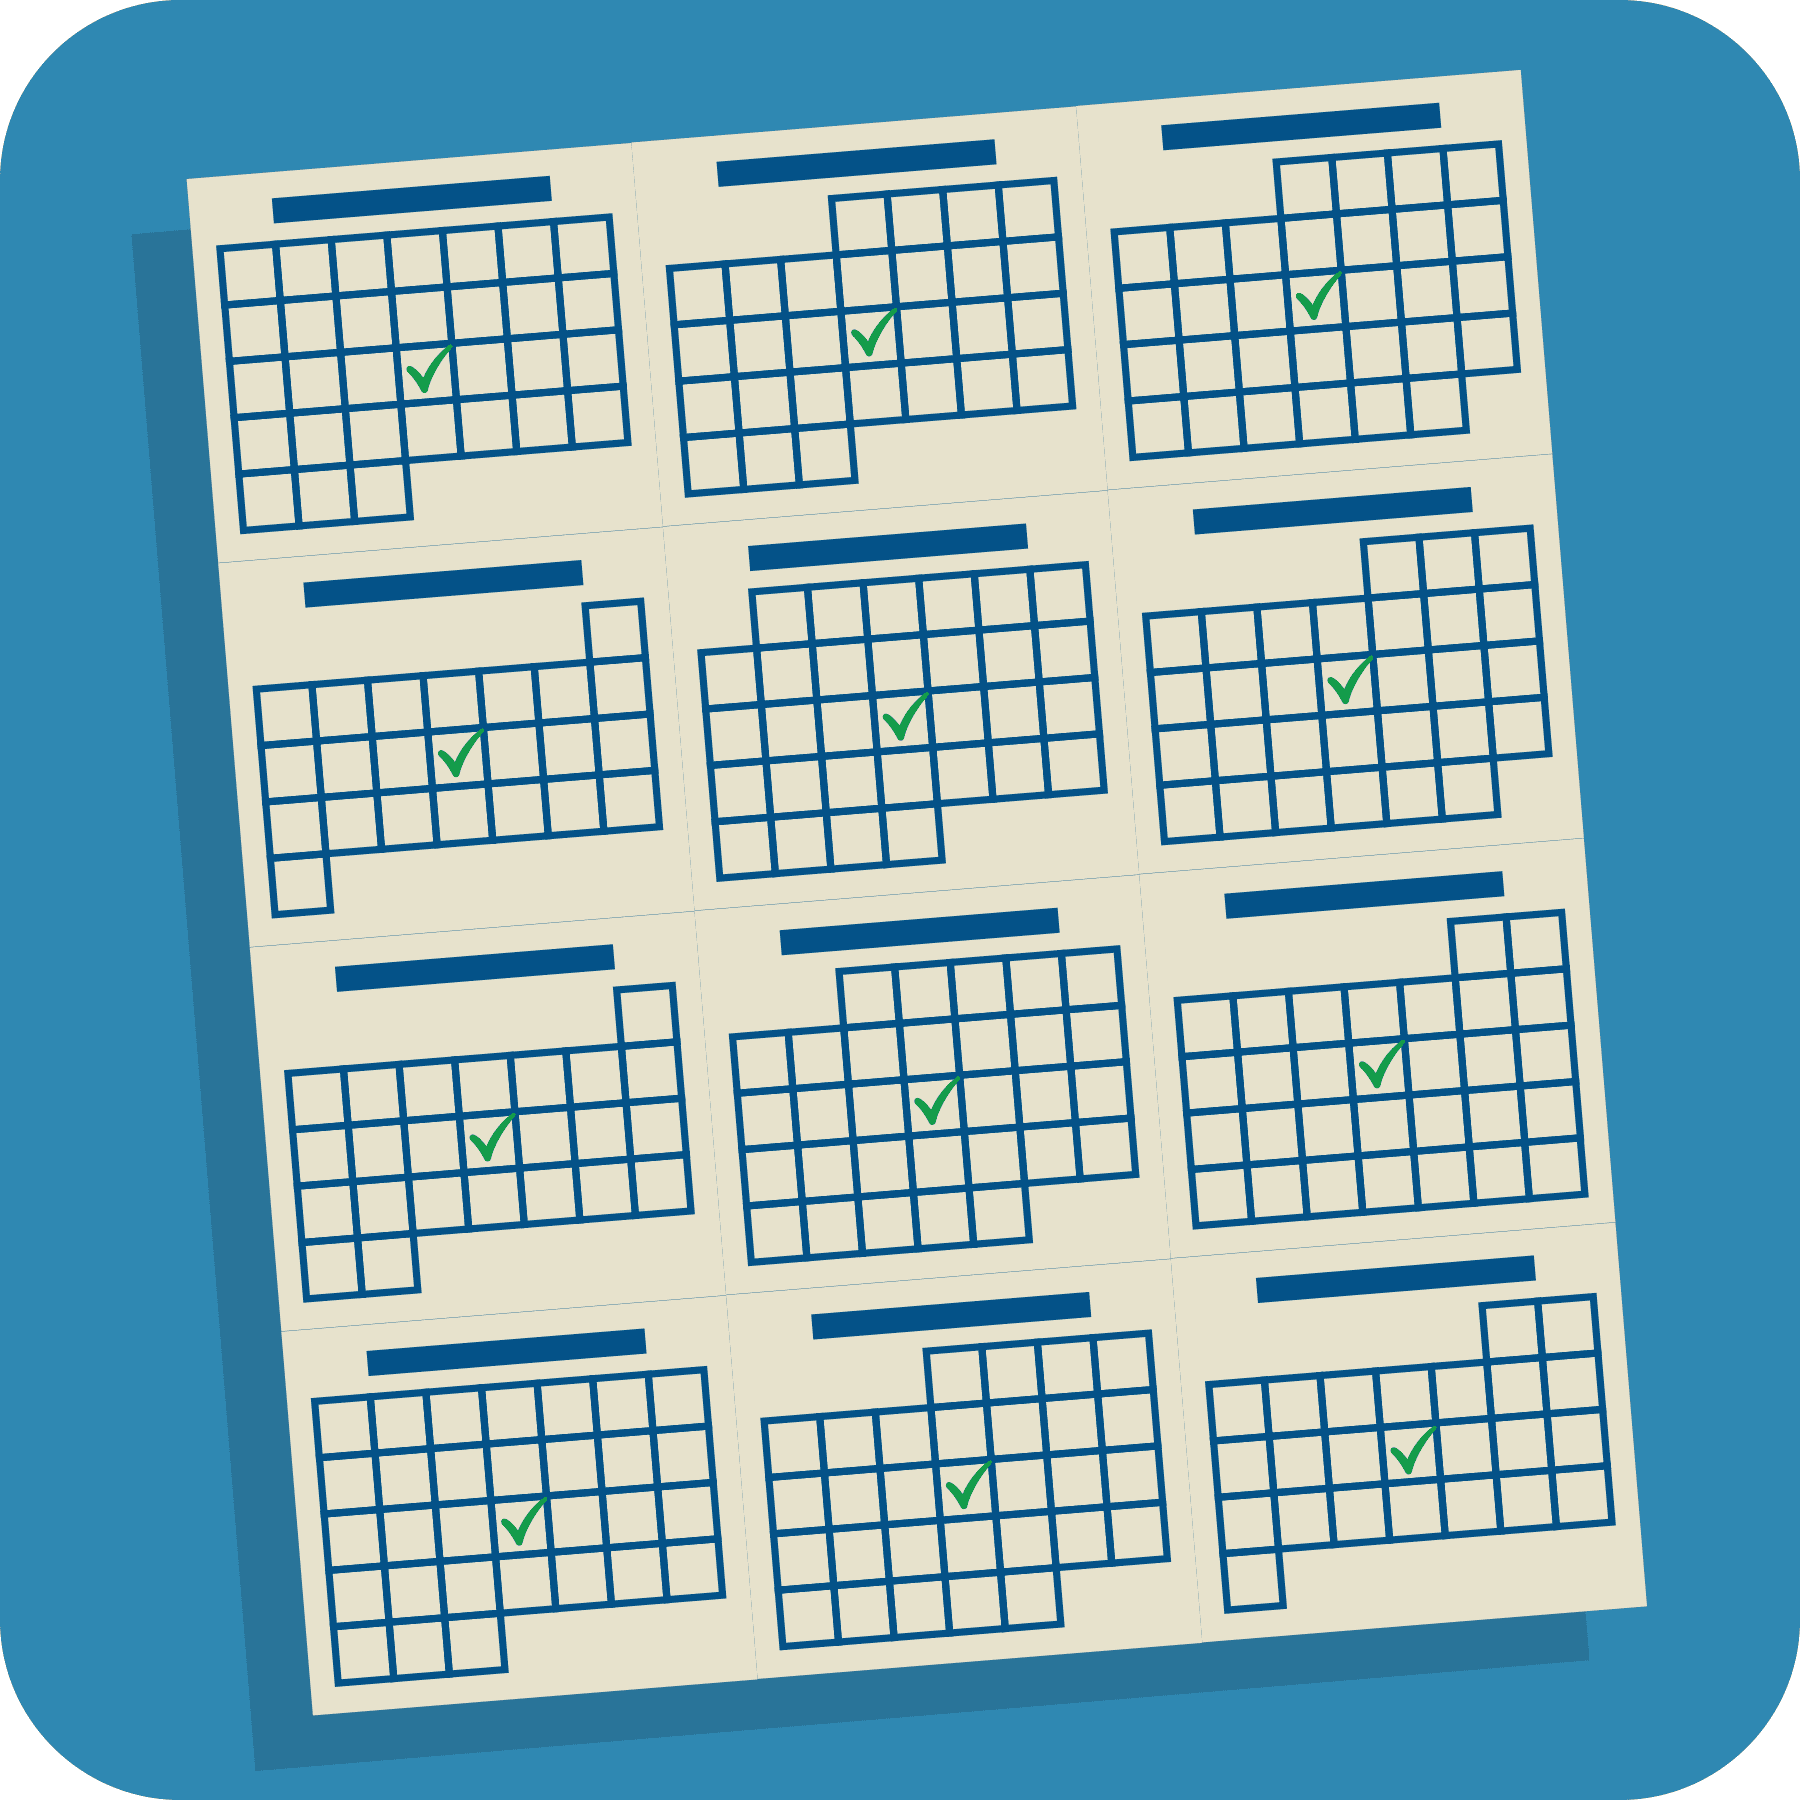 Full calendar showing green checks on each month.